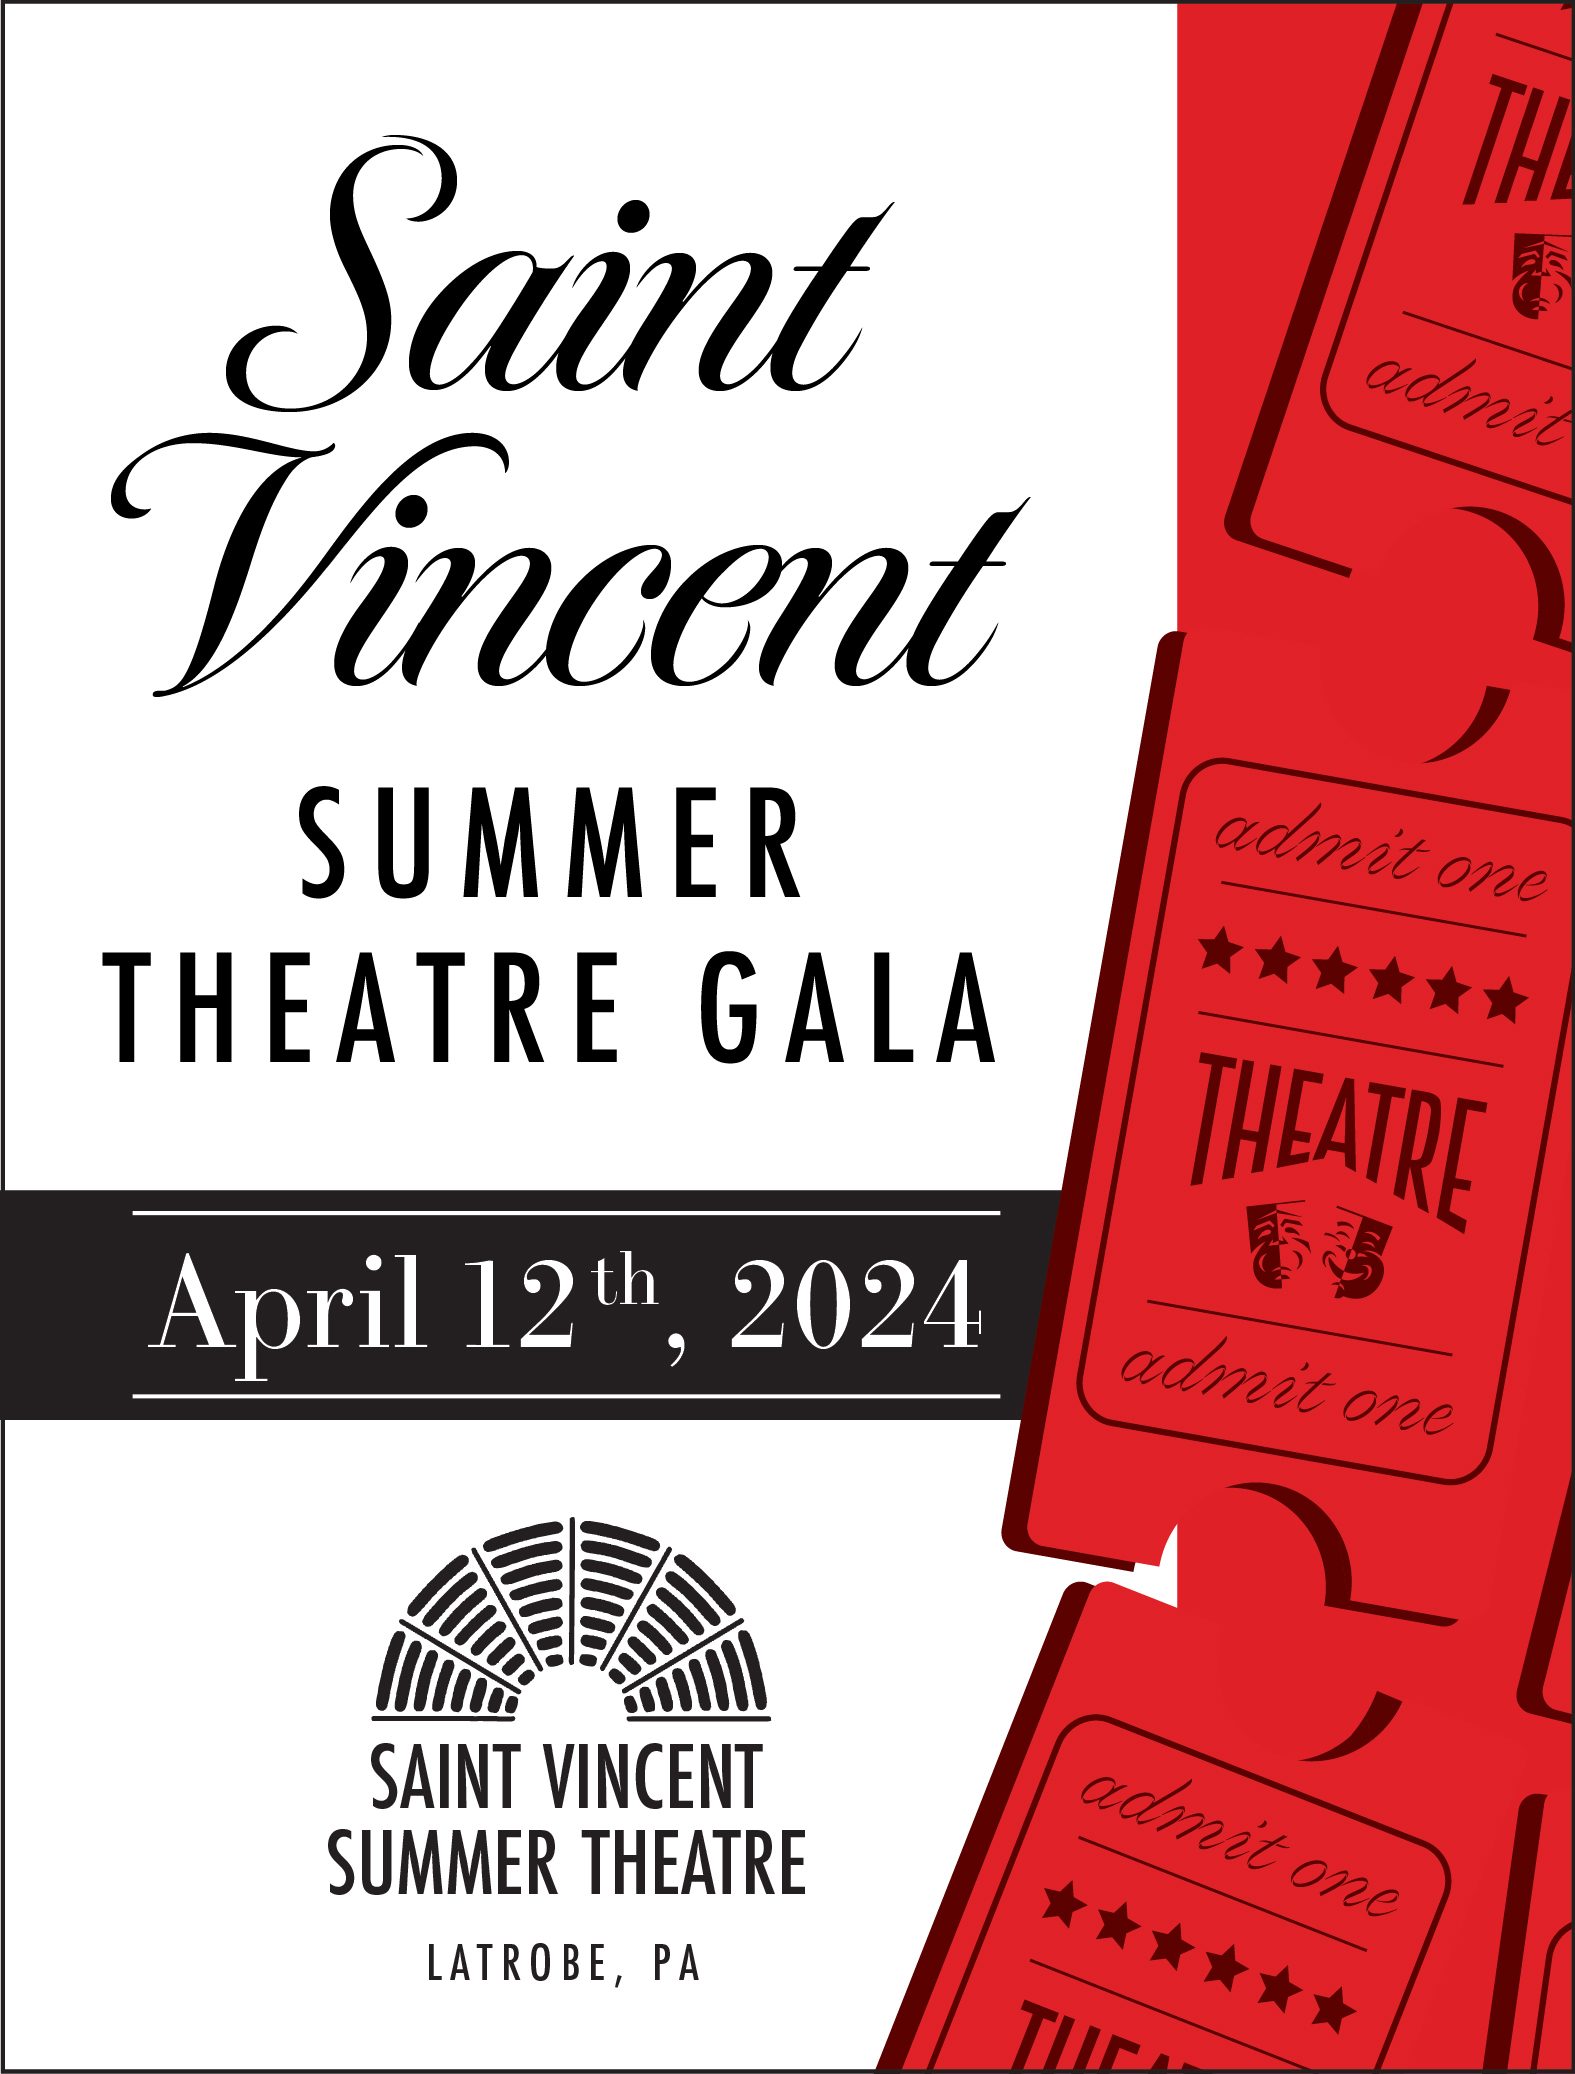 Saint Vincent Summer Theatre Gala flyer